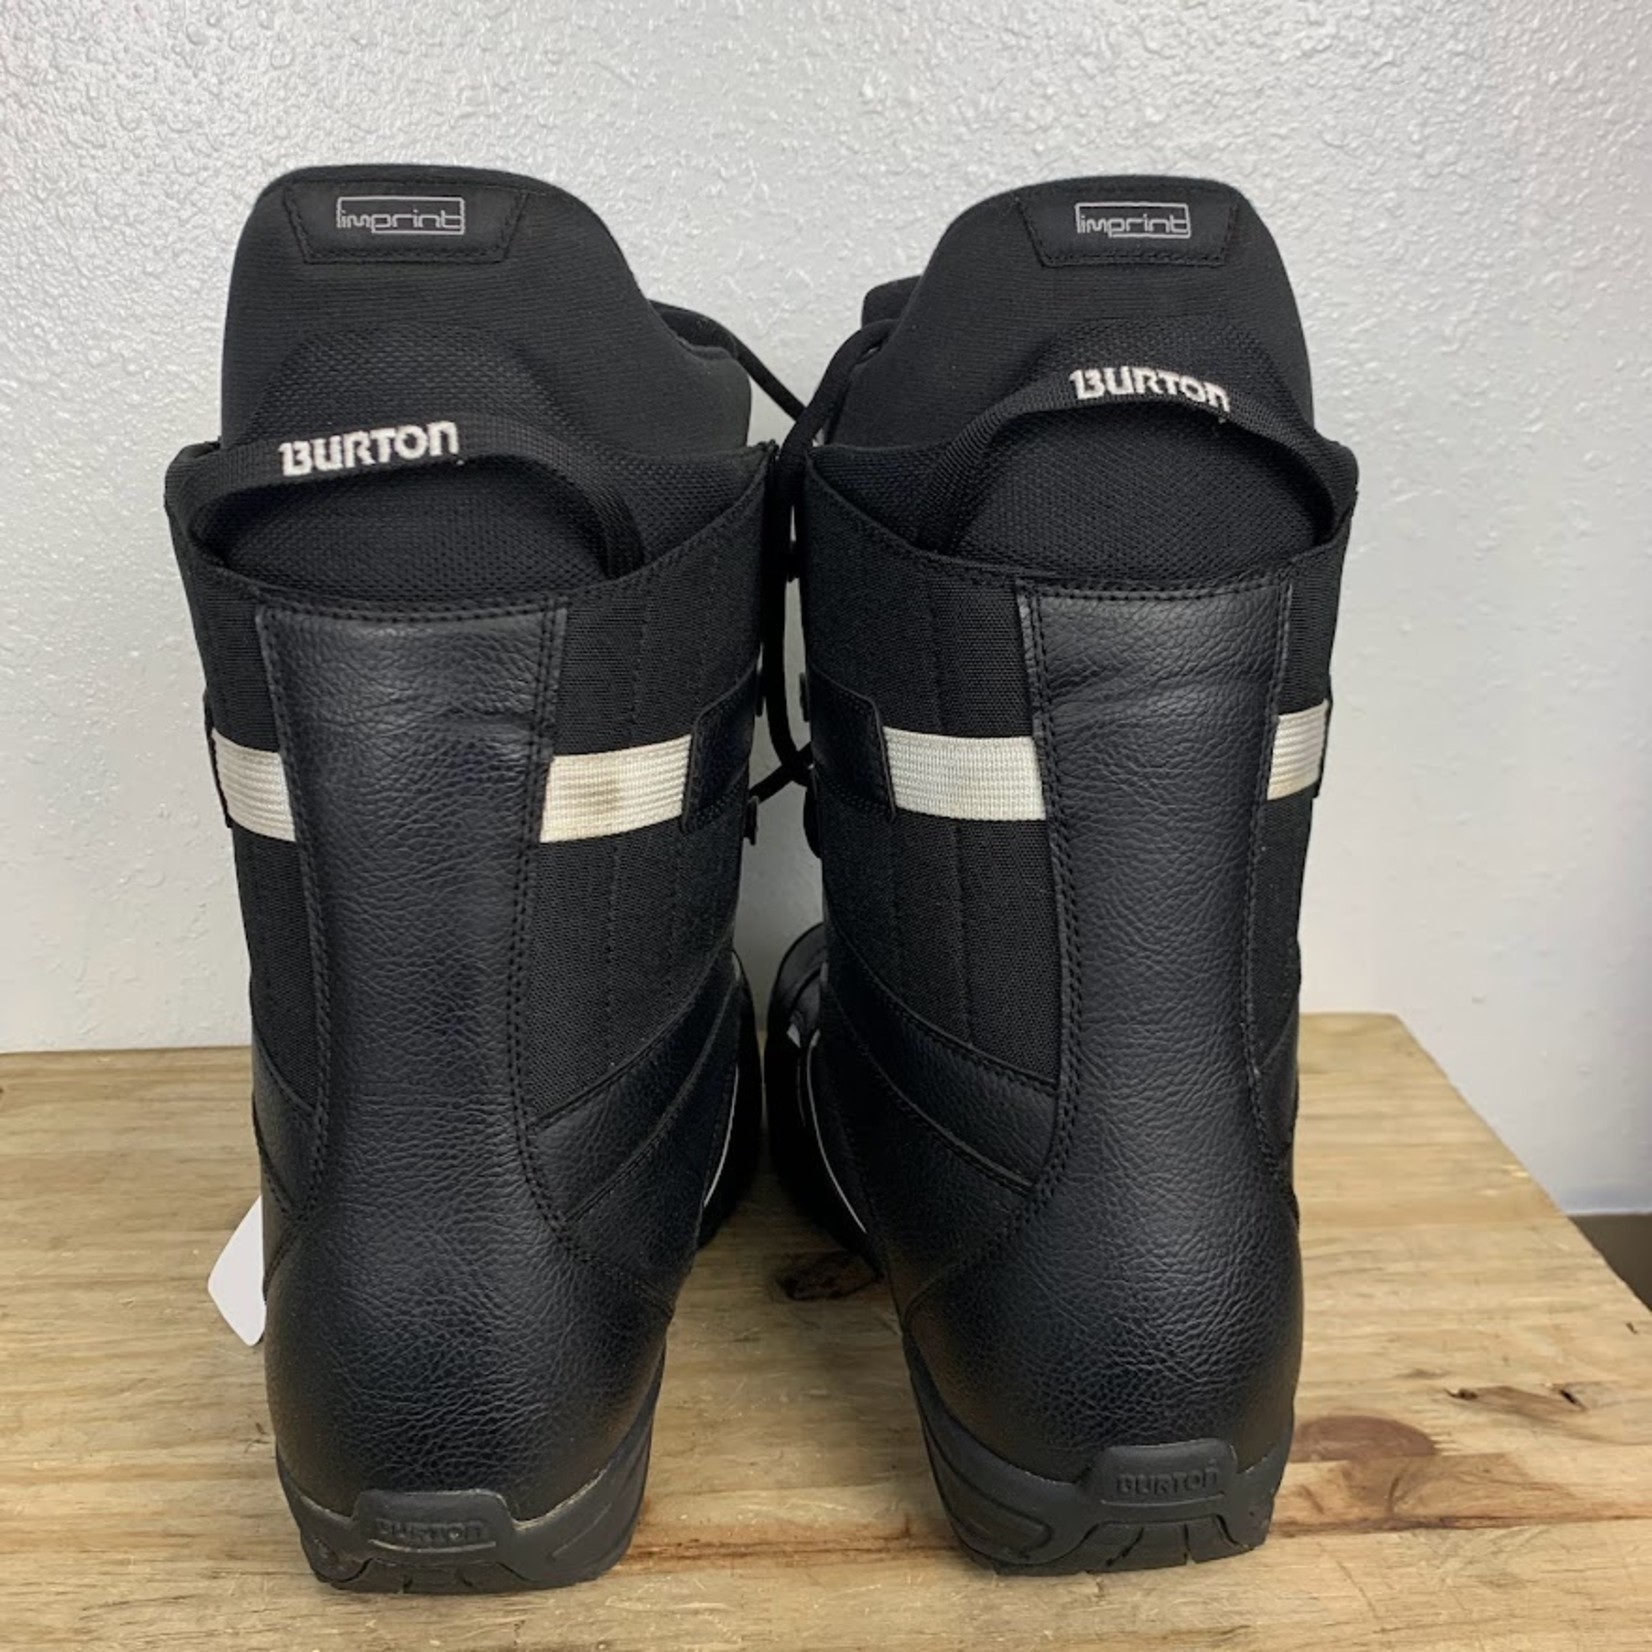 Burton Burton Invader Lace Snowboard Boots, Size 11